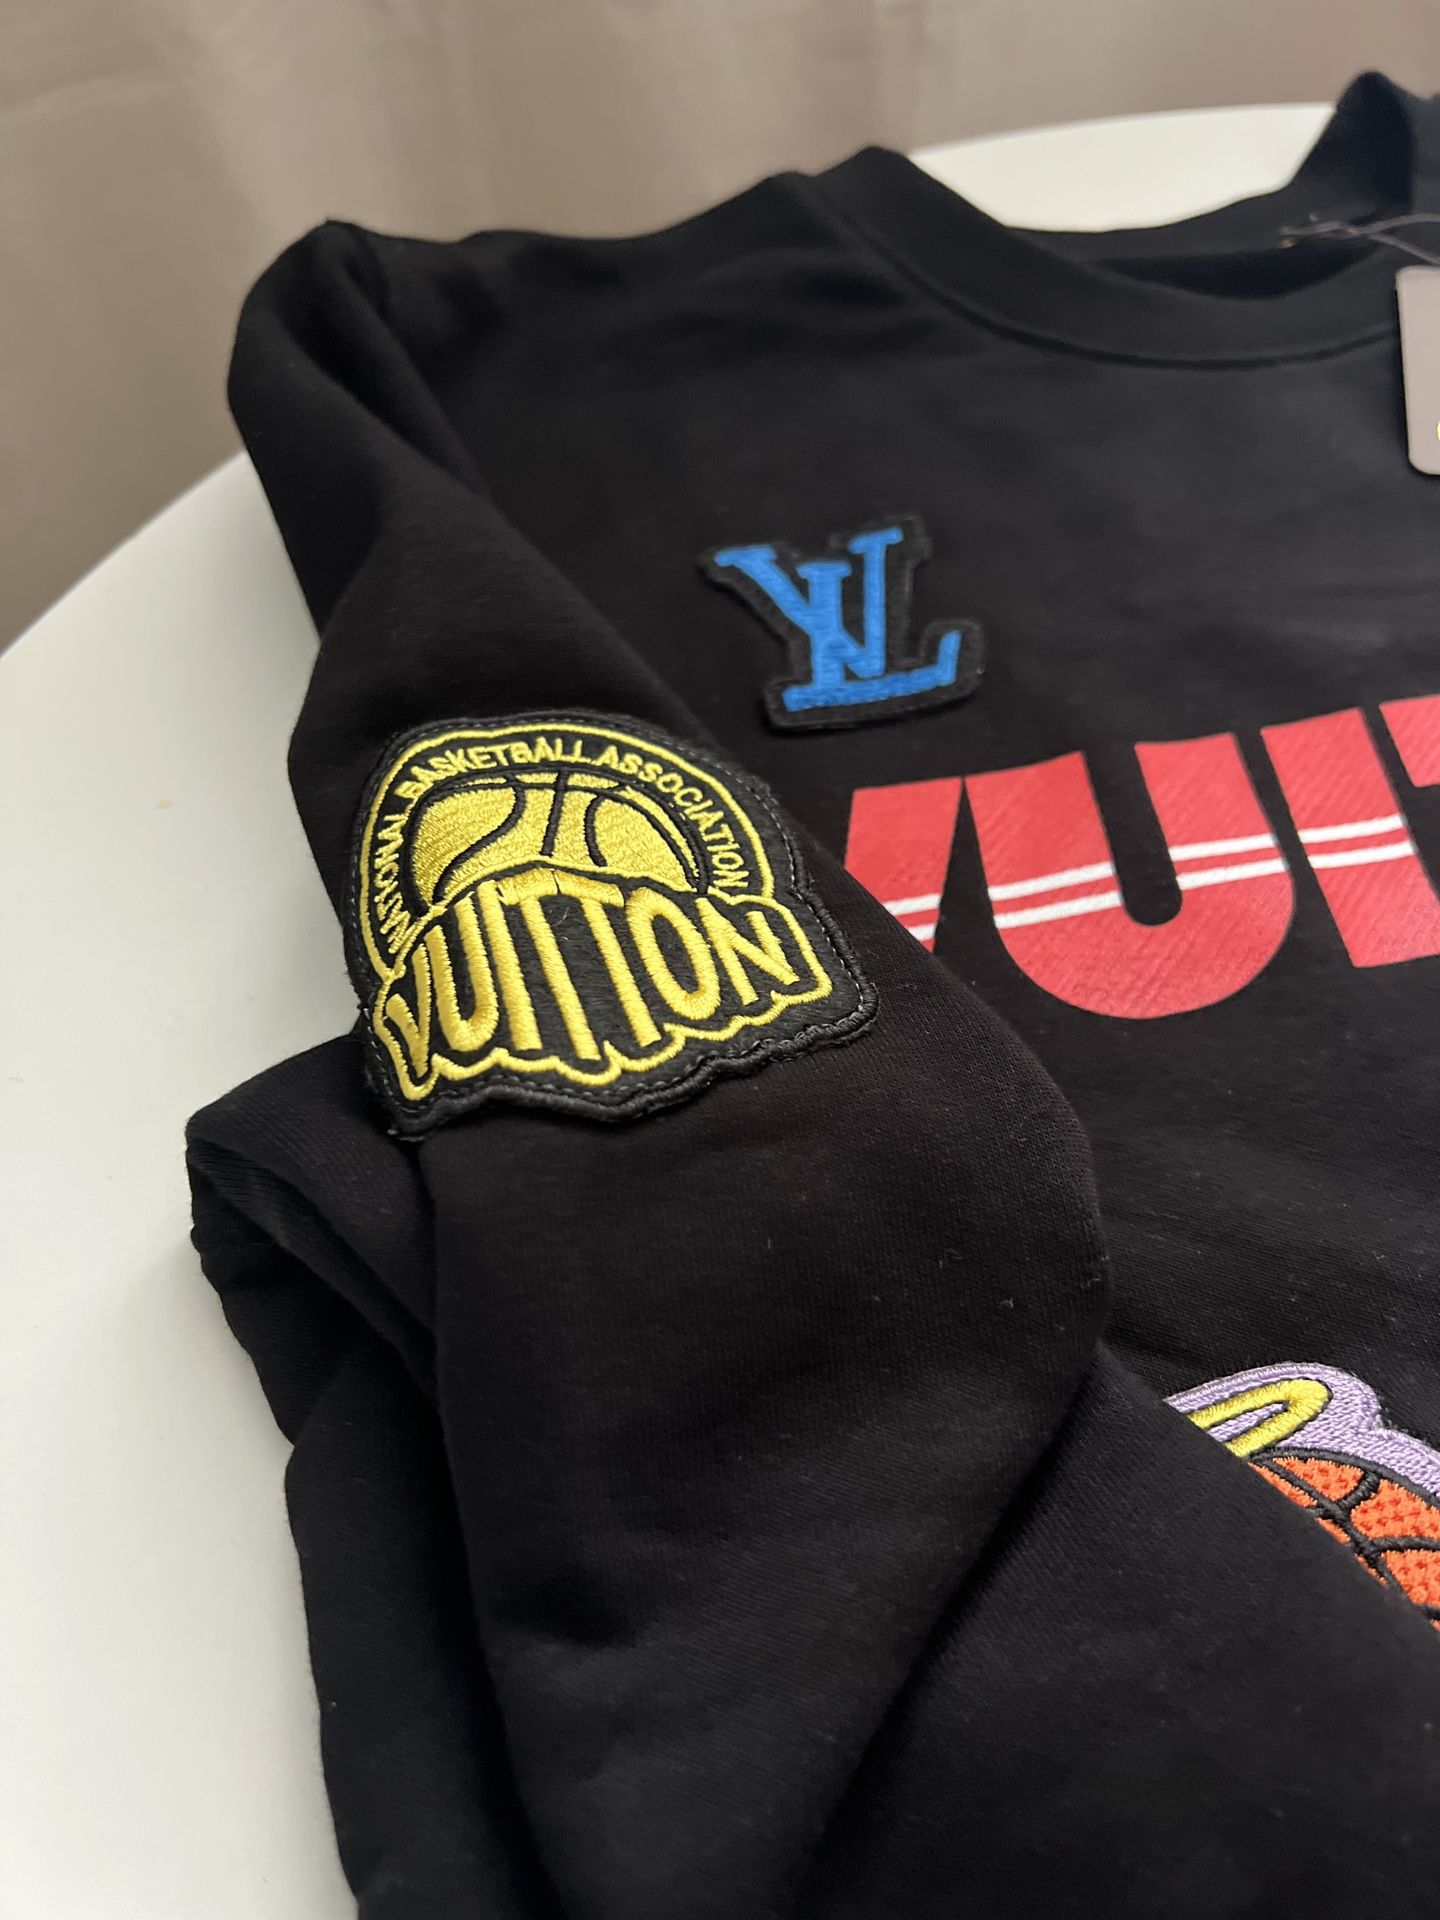 Louis Vuitton X NBA Basketball Shorts for Sale in Austin, TX - OfferUp